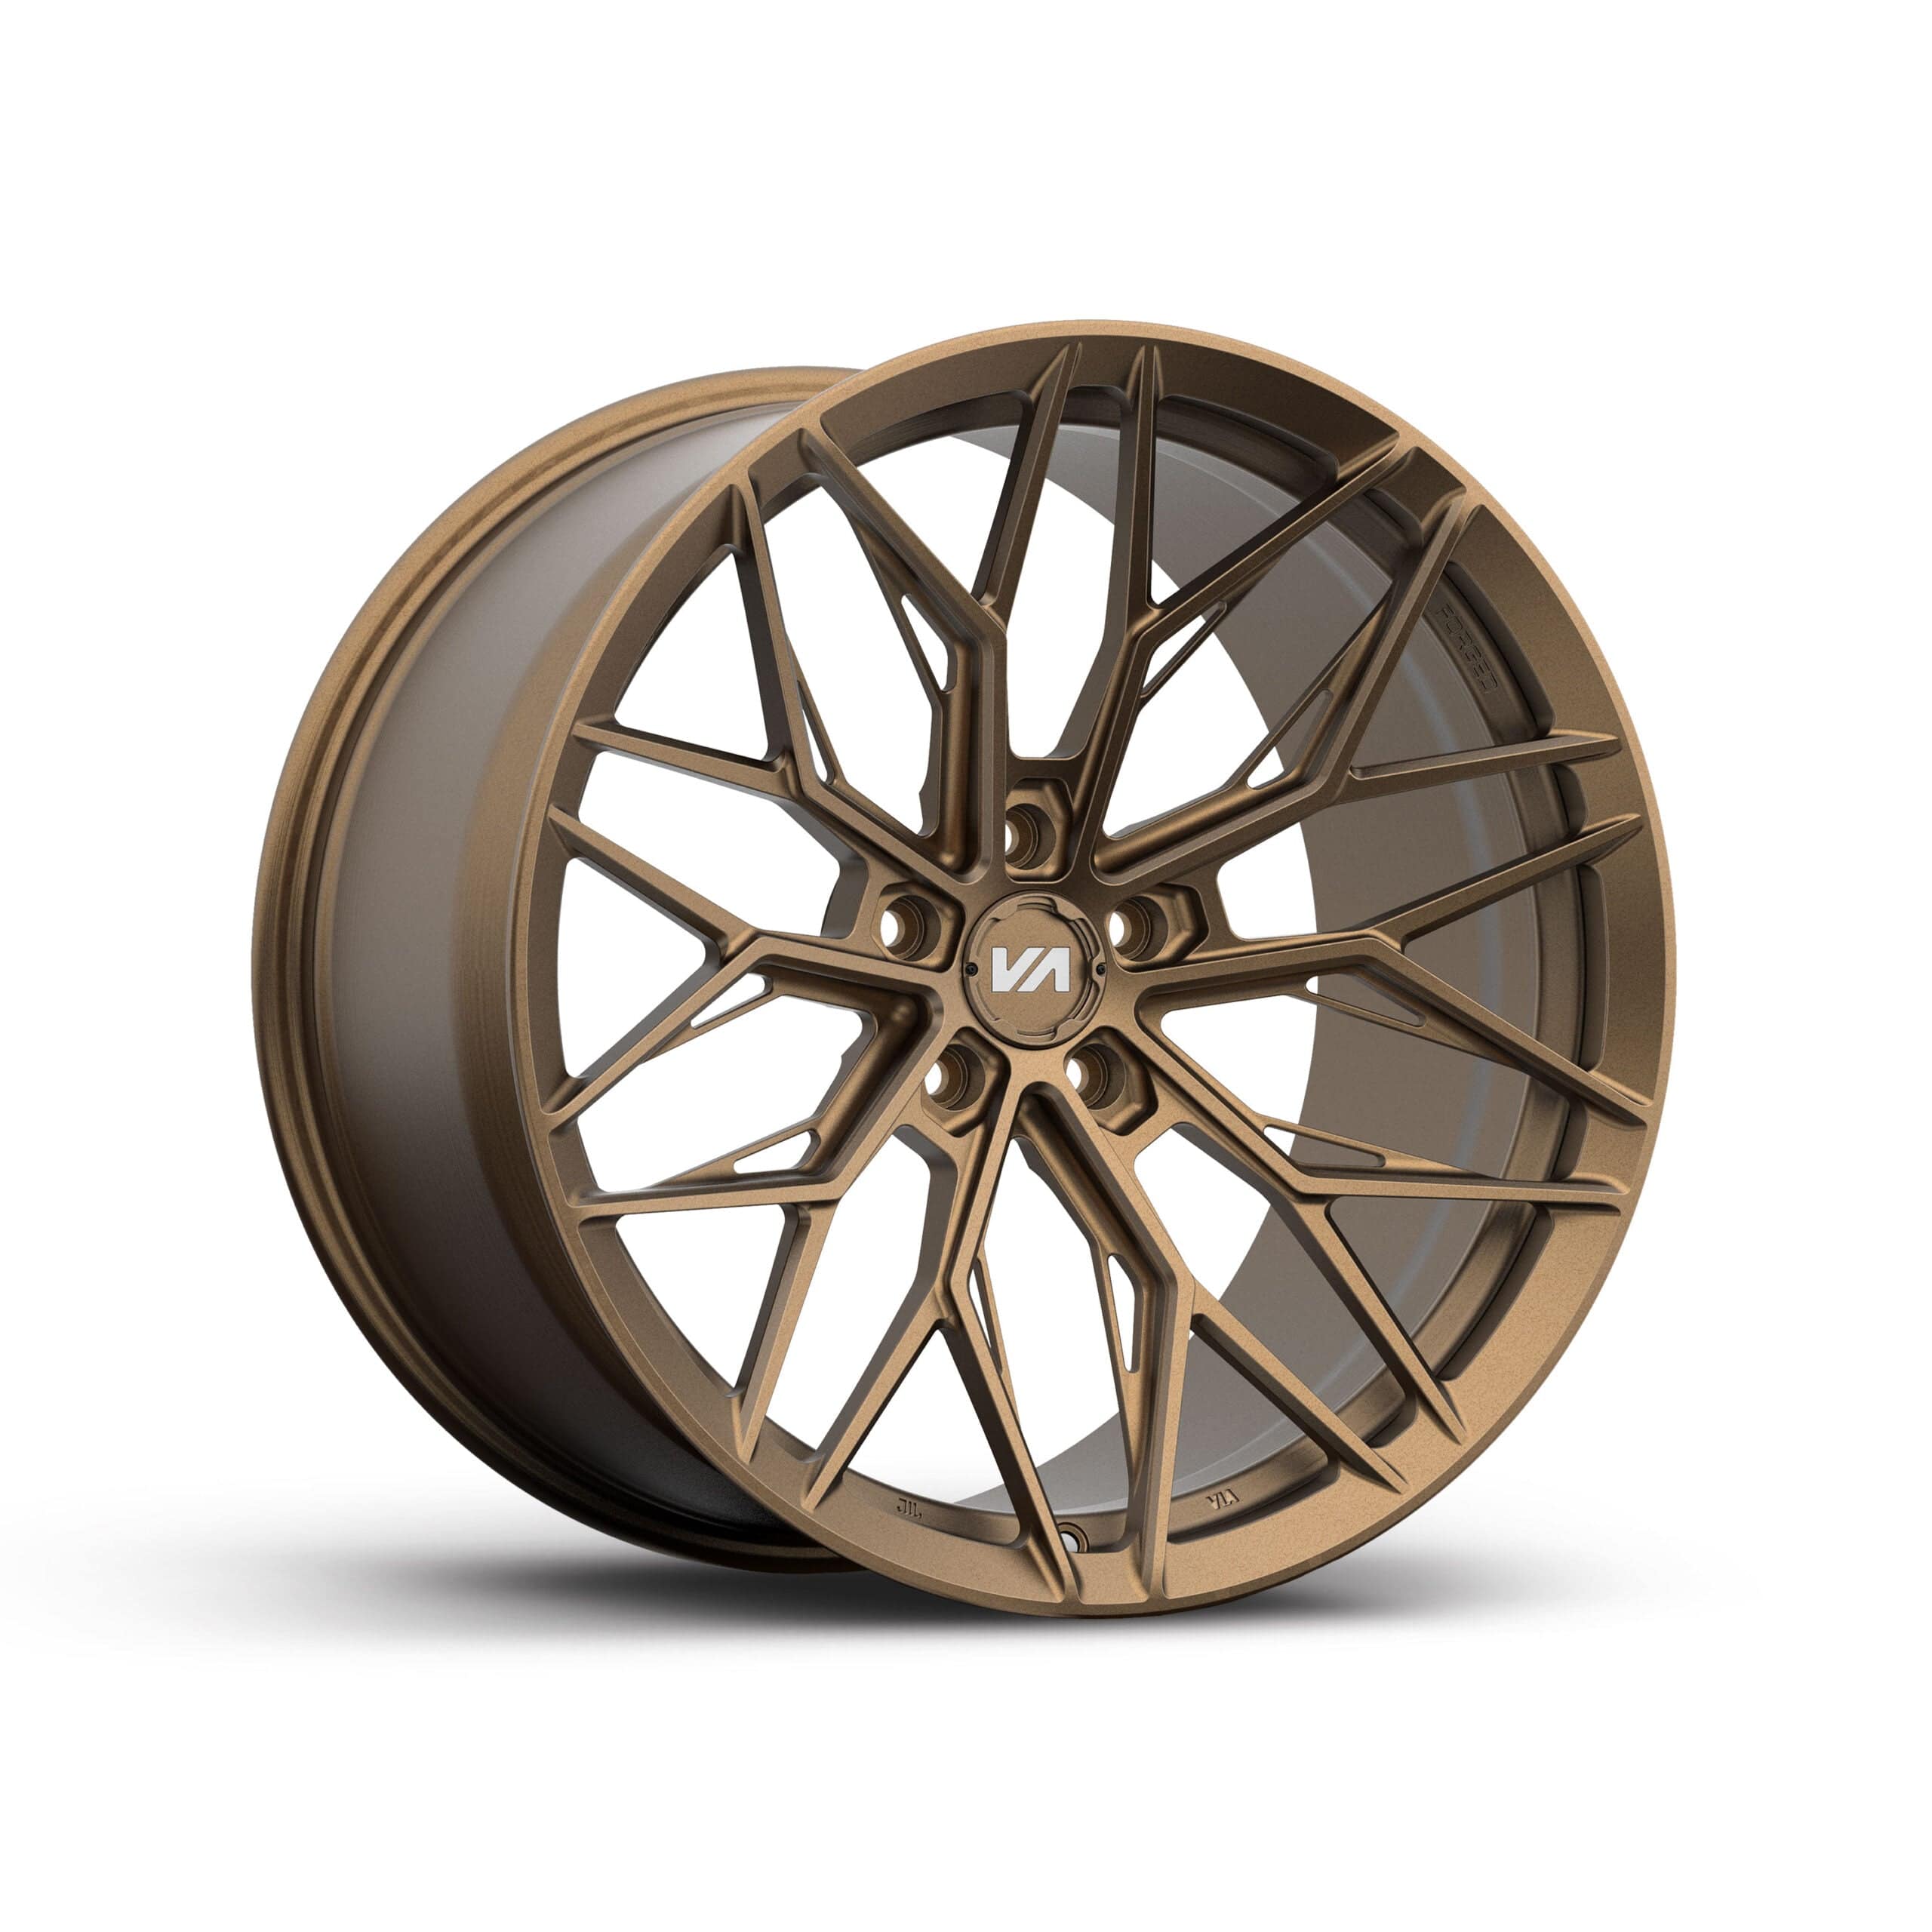 Kies-Motorsports Variant Variant™ Maxim Collection Alloy Wheels 19x11